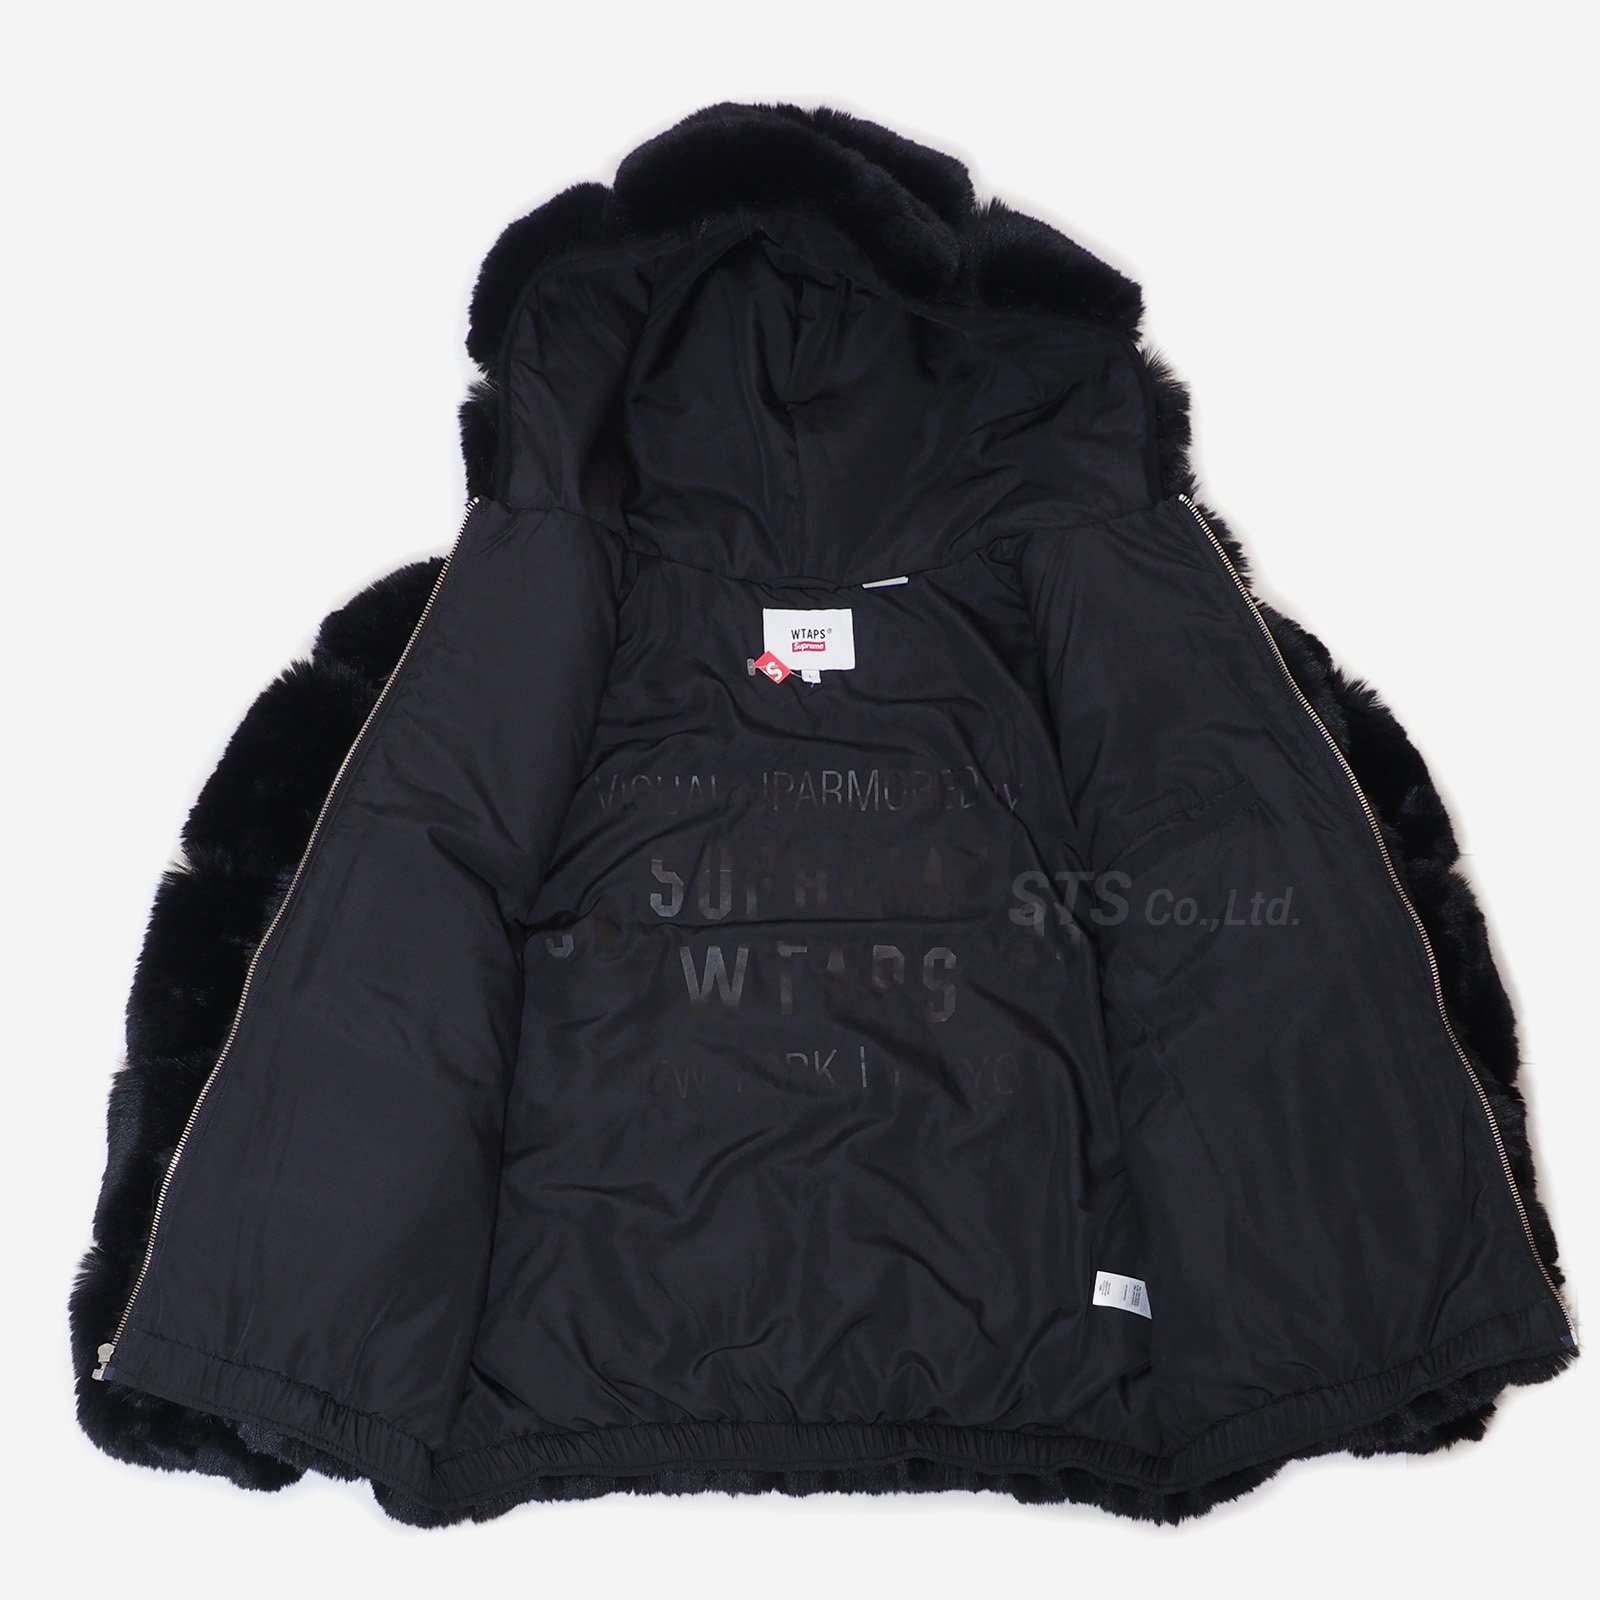 Supreme WTAPS Faux Fur Hooded Jacket